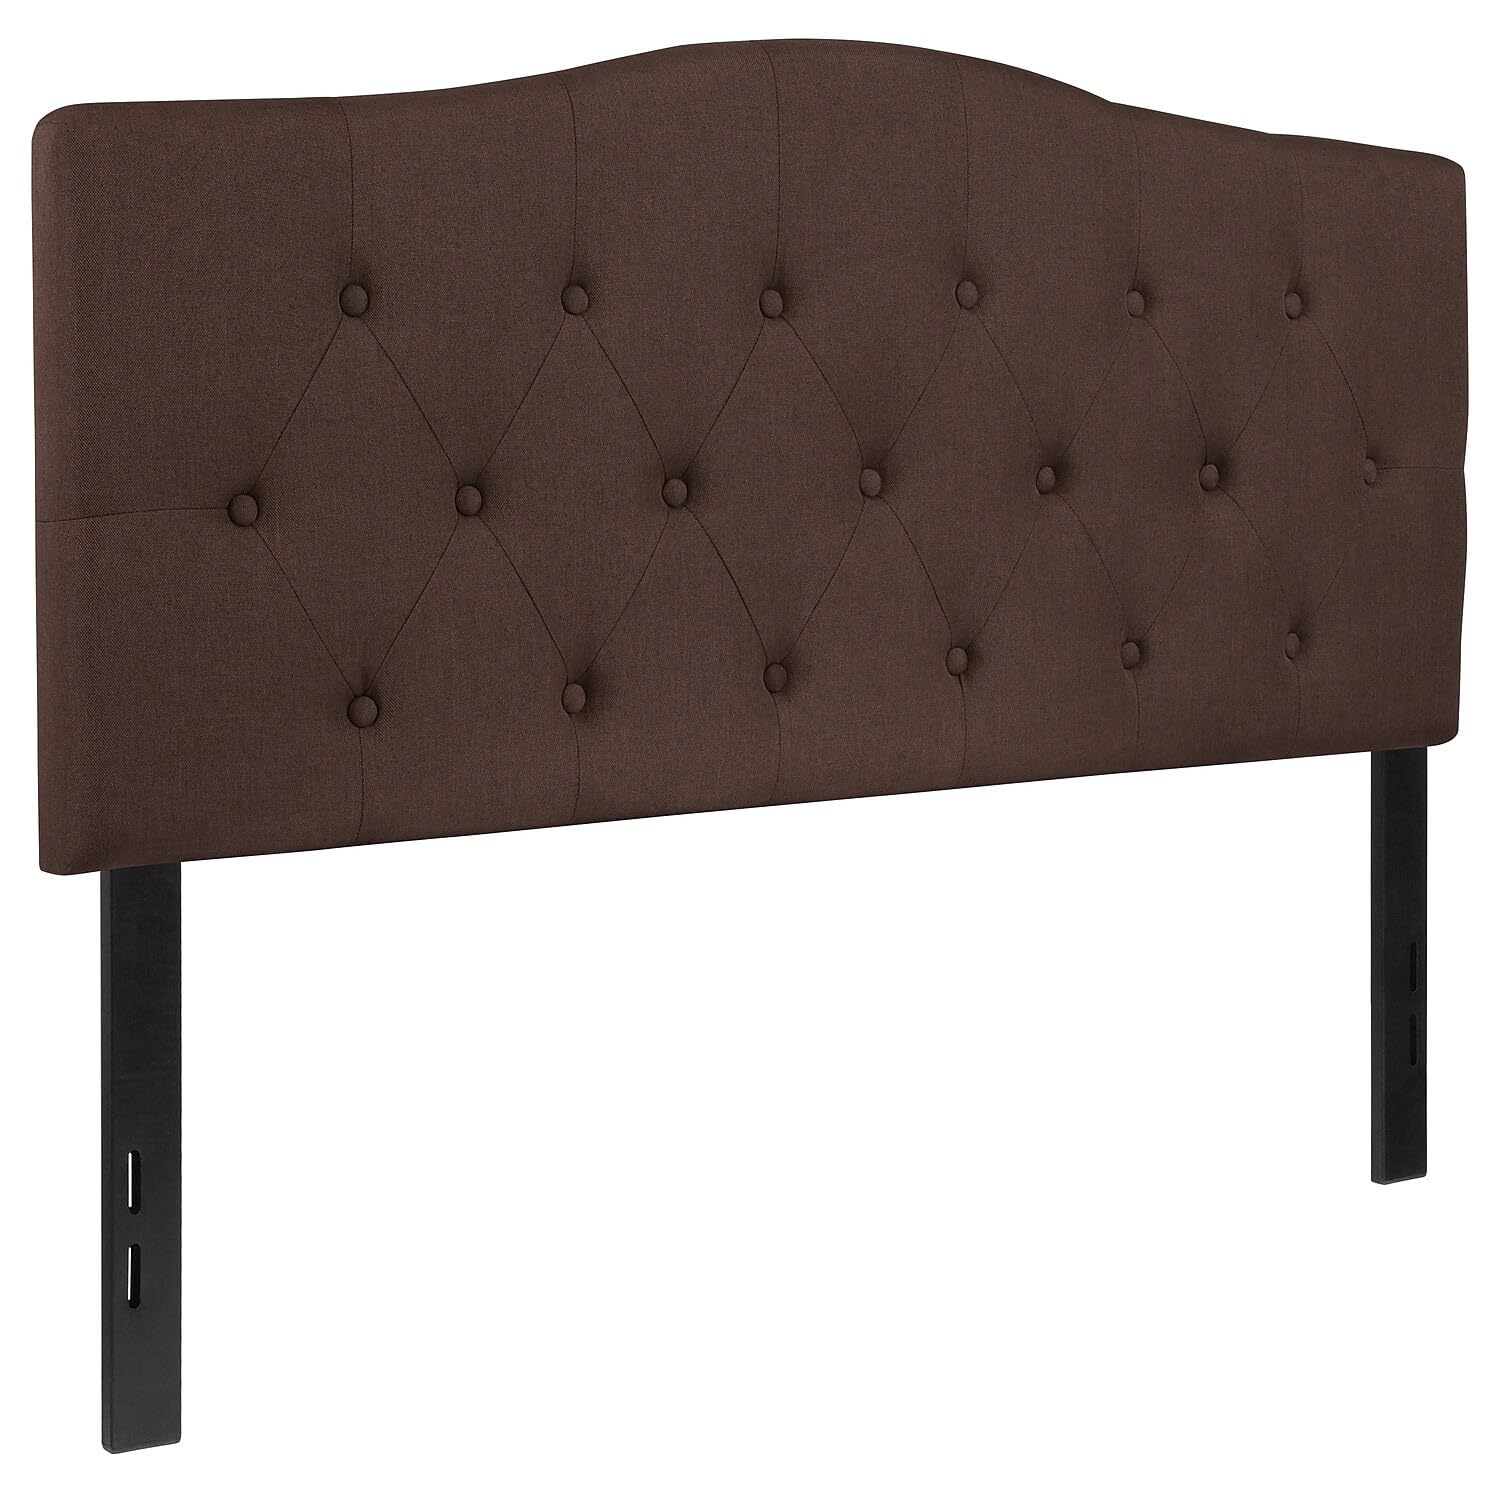 Book Cover Flash Furniture Cambridge Tufted Upholstered Full Size Headboard in Dark Brown Fabric Dark Brown Full